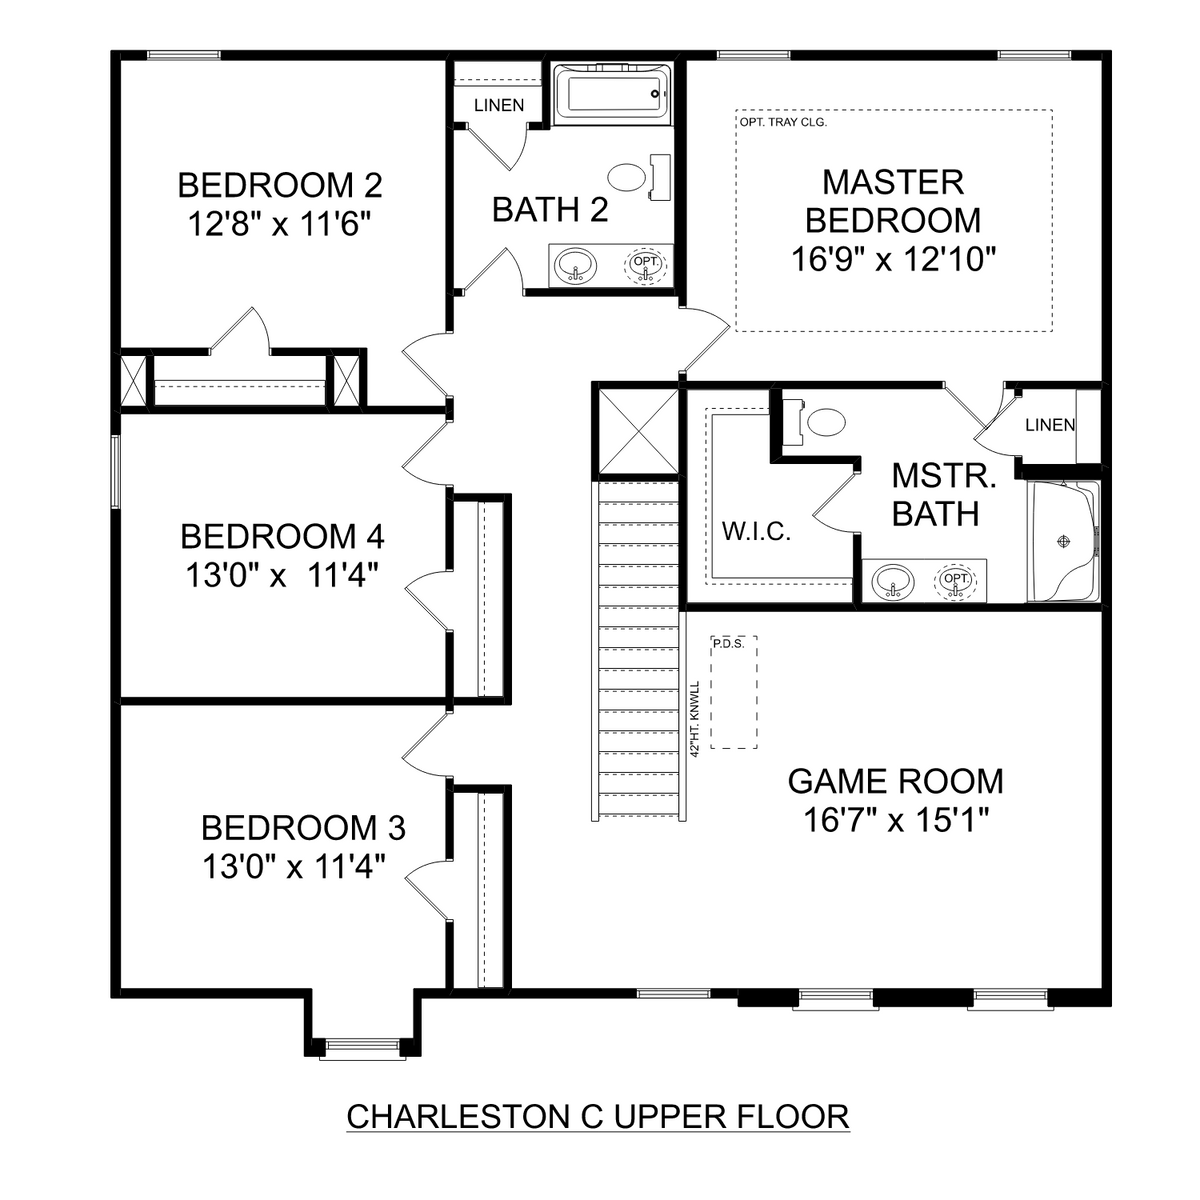 2 - The Charleston C floor plan layout for 27456 Mckenna Drive in Davidson Homes' Mallard Landing community.